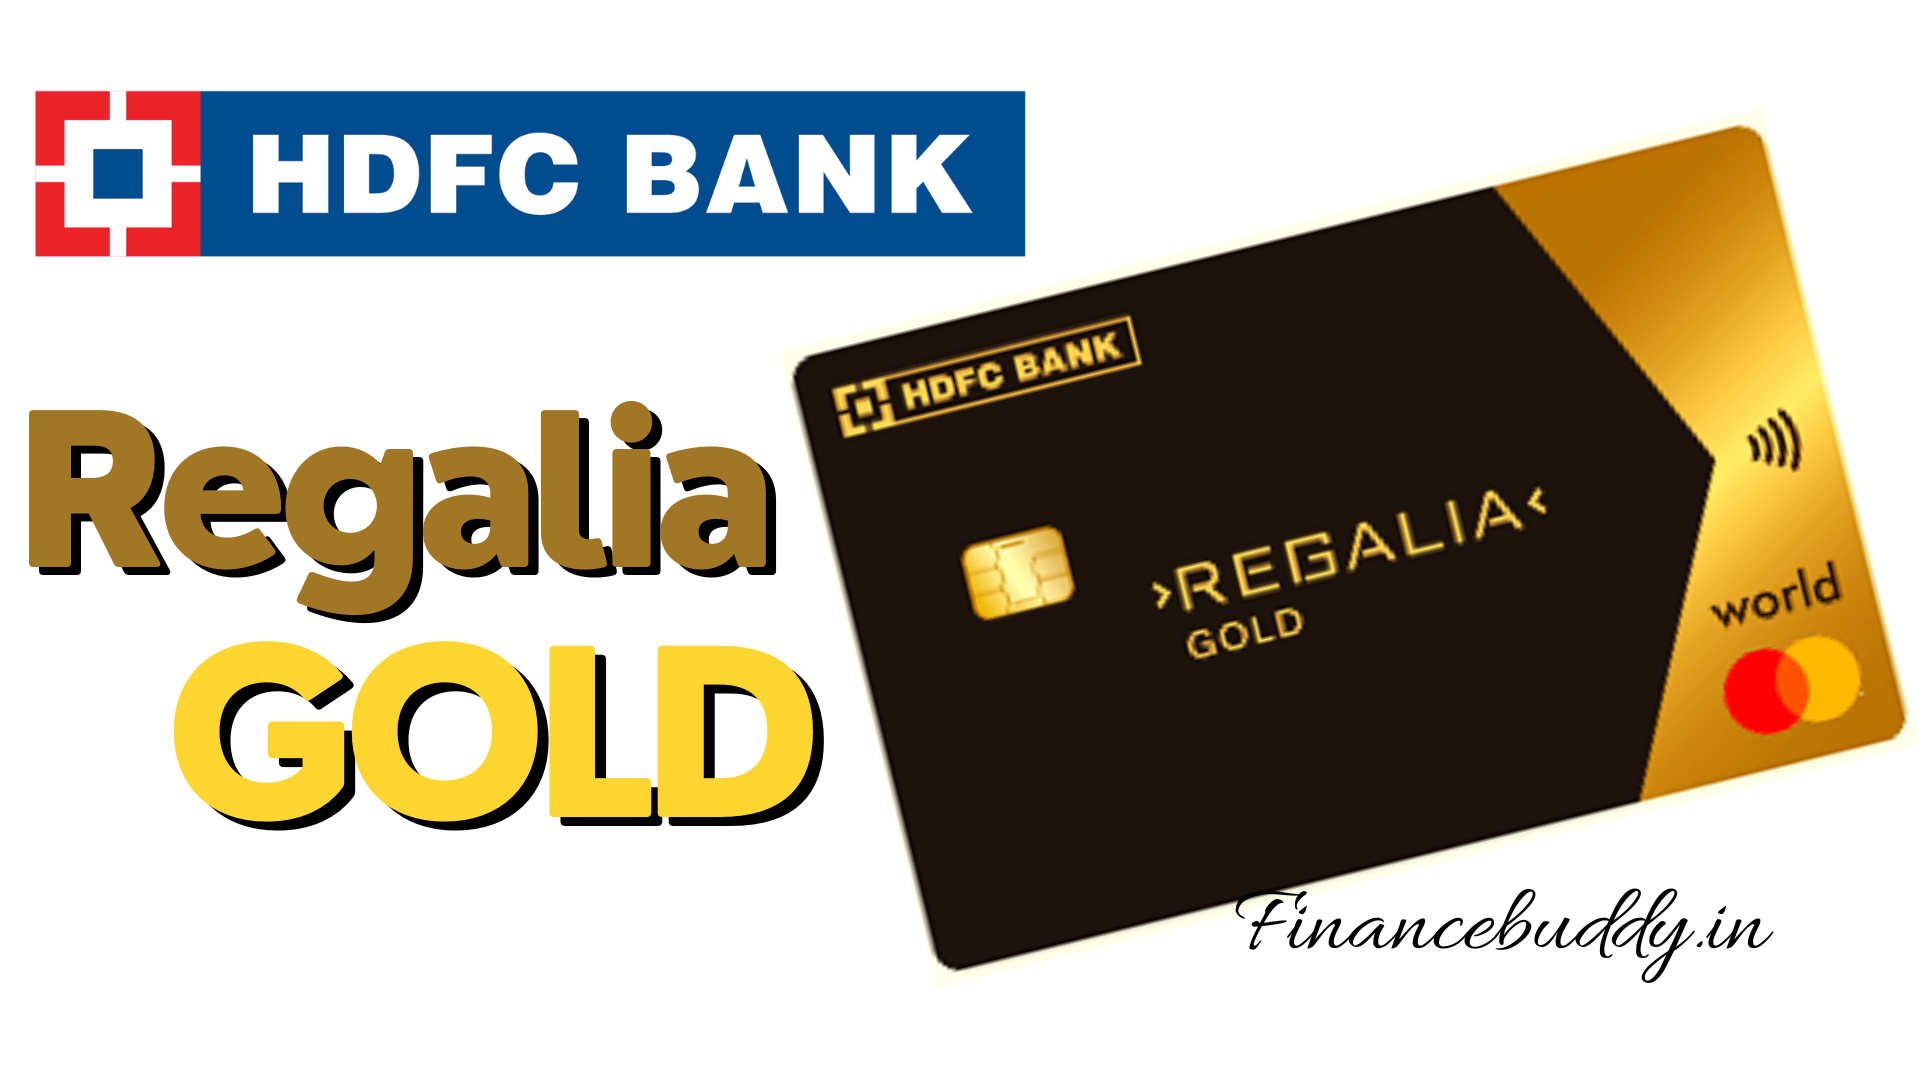 HDFC Regalia gold Credit Card